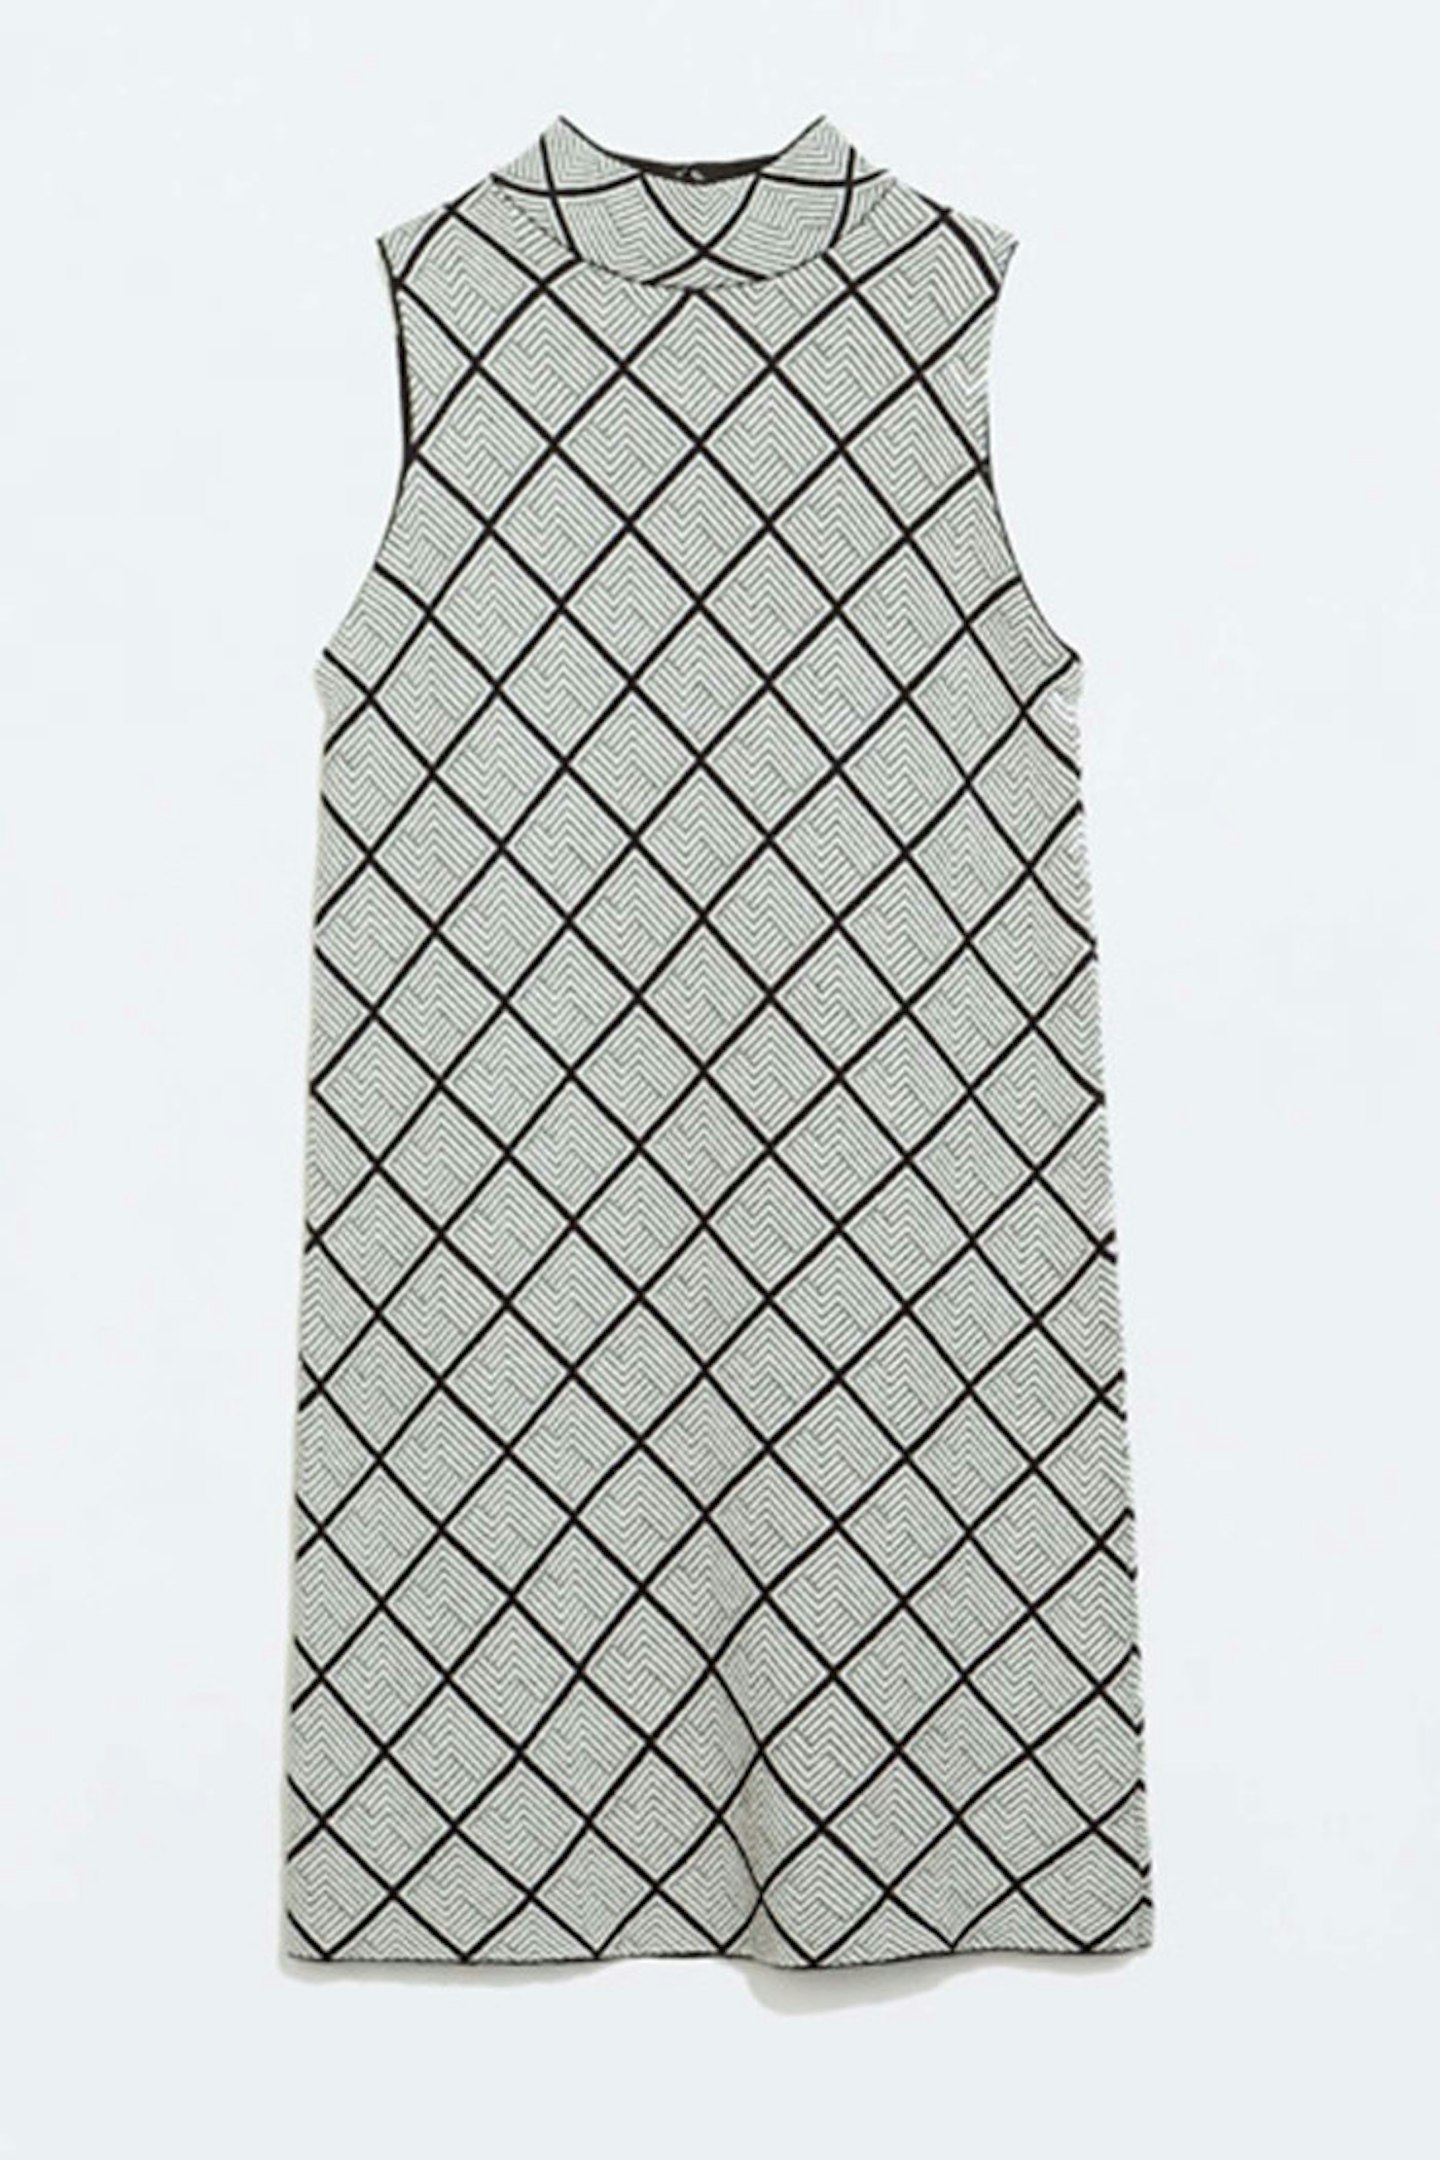 10. Sleeveless Jaquard Dress, £39.99, Zara